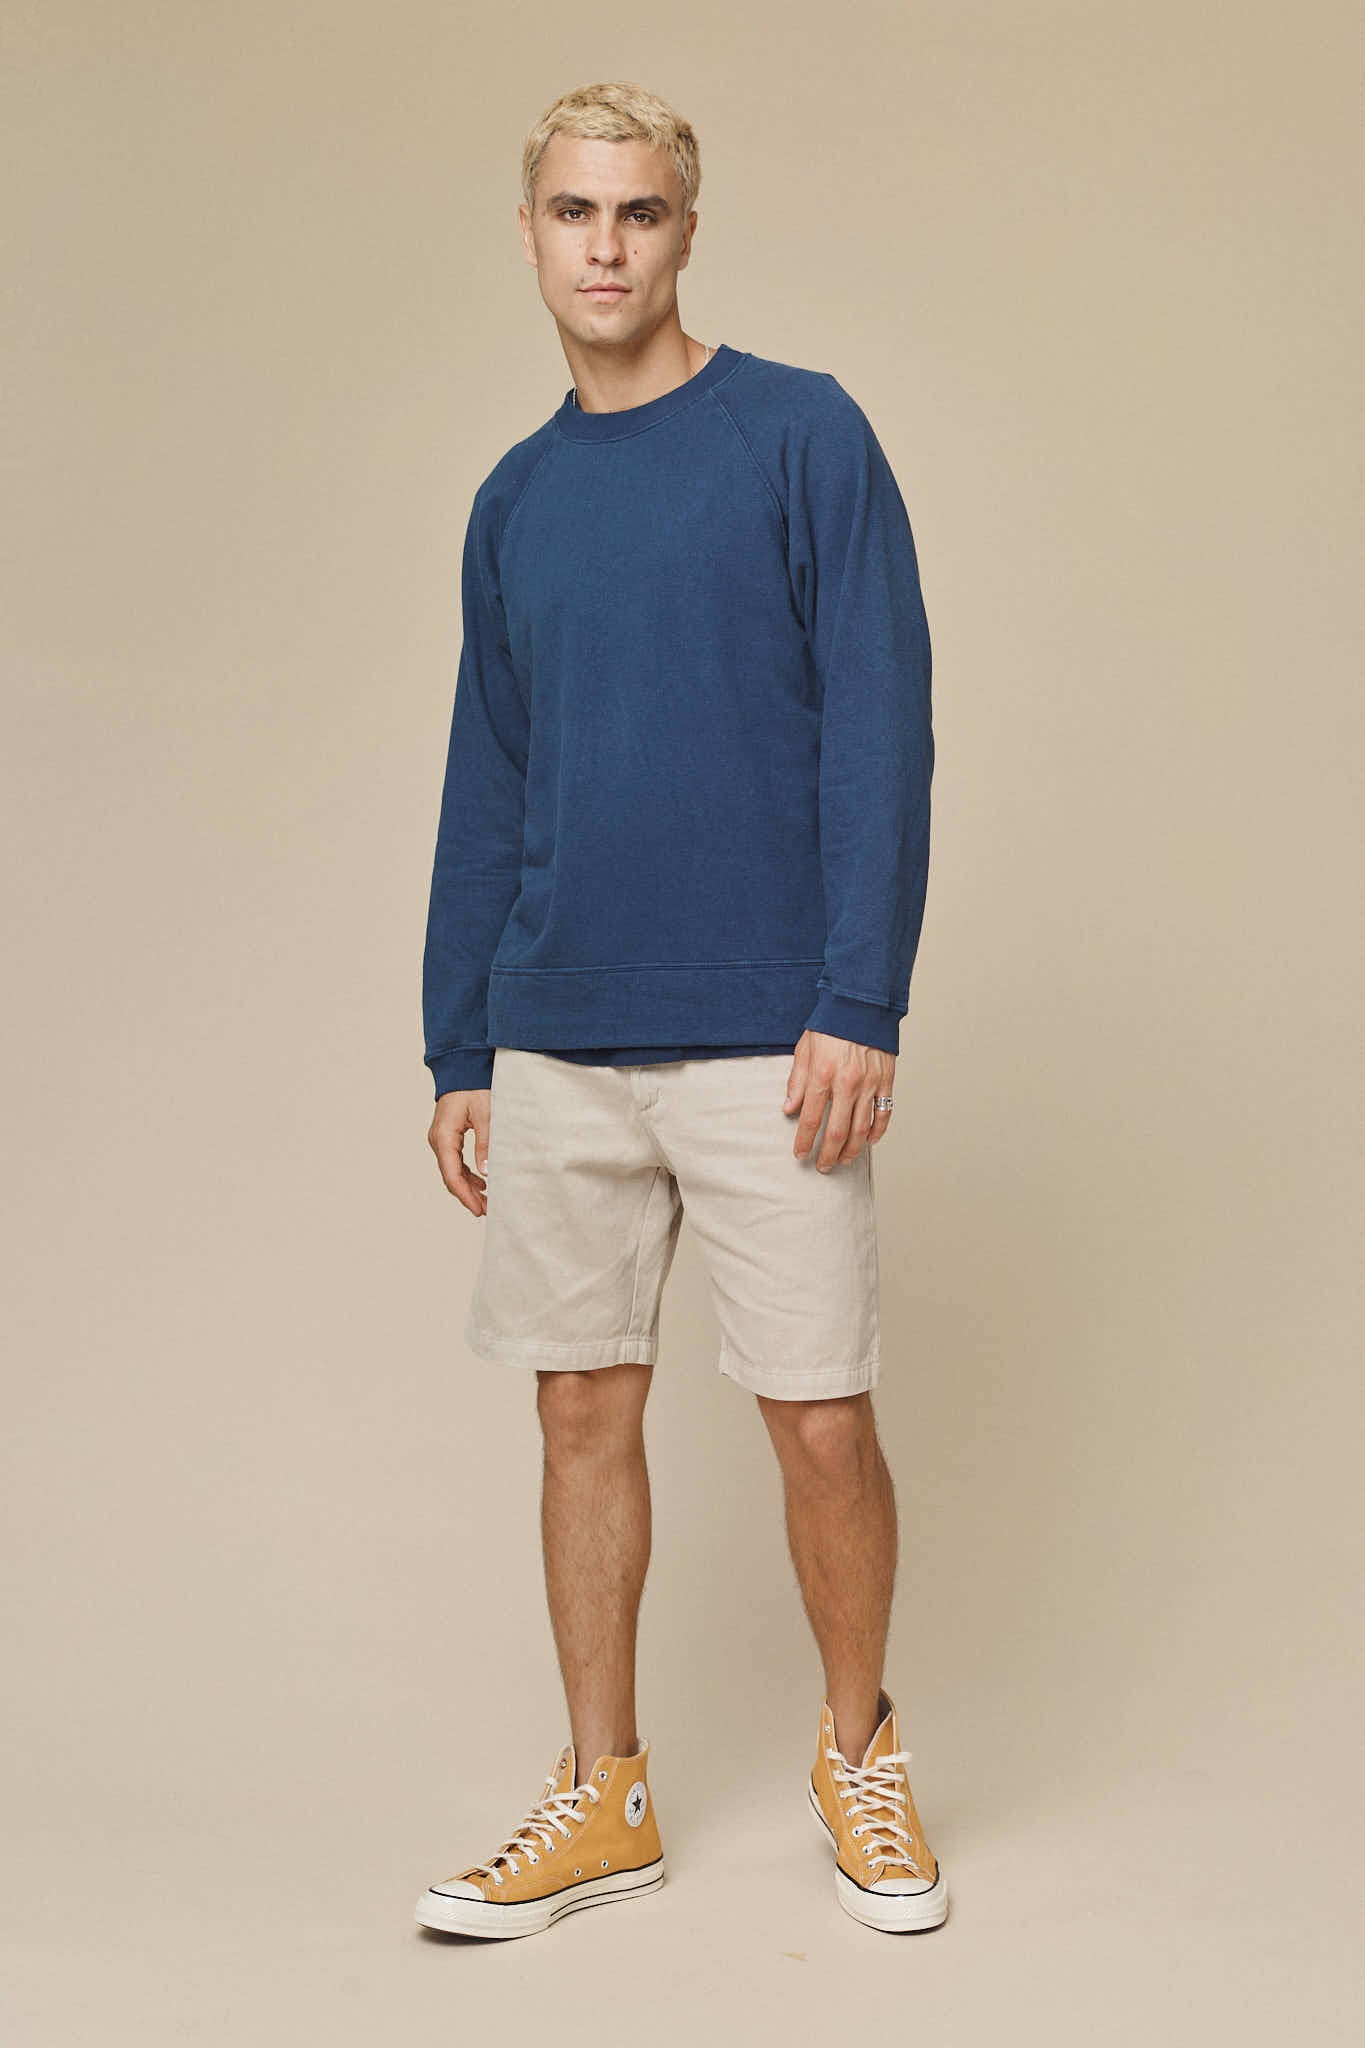 Sierra Raglan Sweatshirt | Jungmaven Hemp Clothing & Accessories / model_desc: Shen is 6’2” wearing L